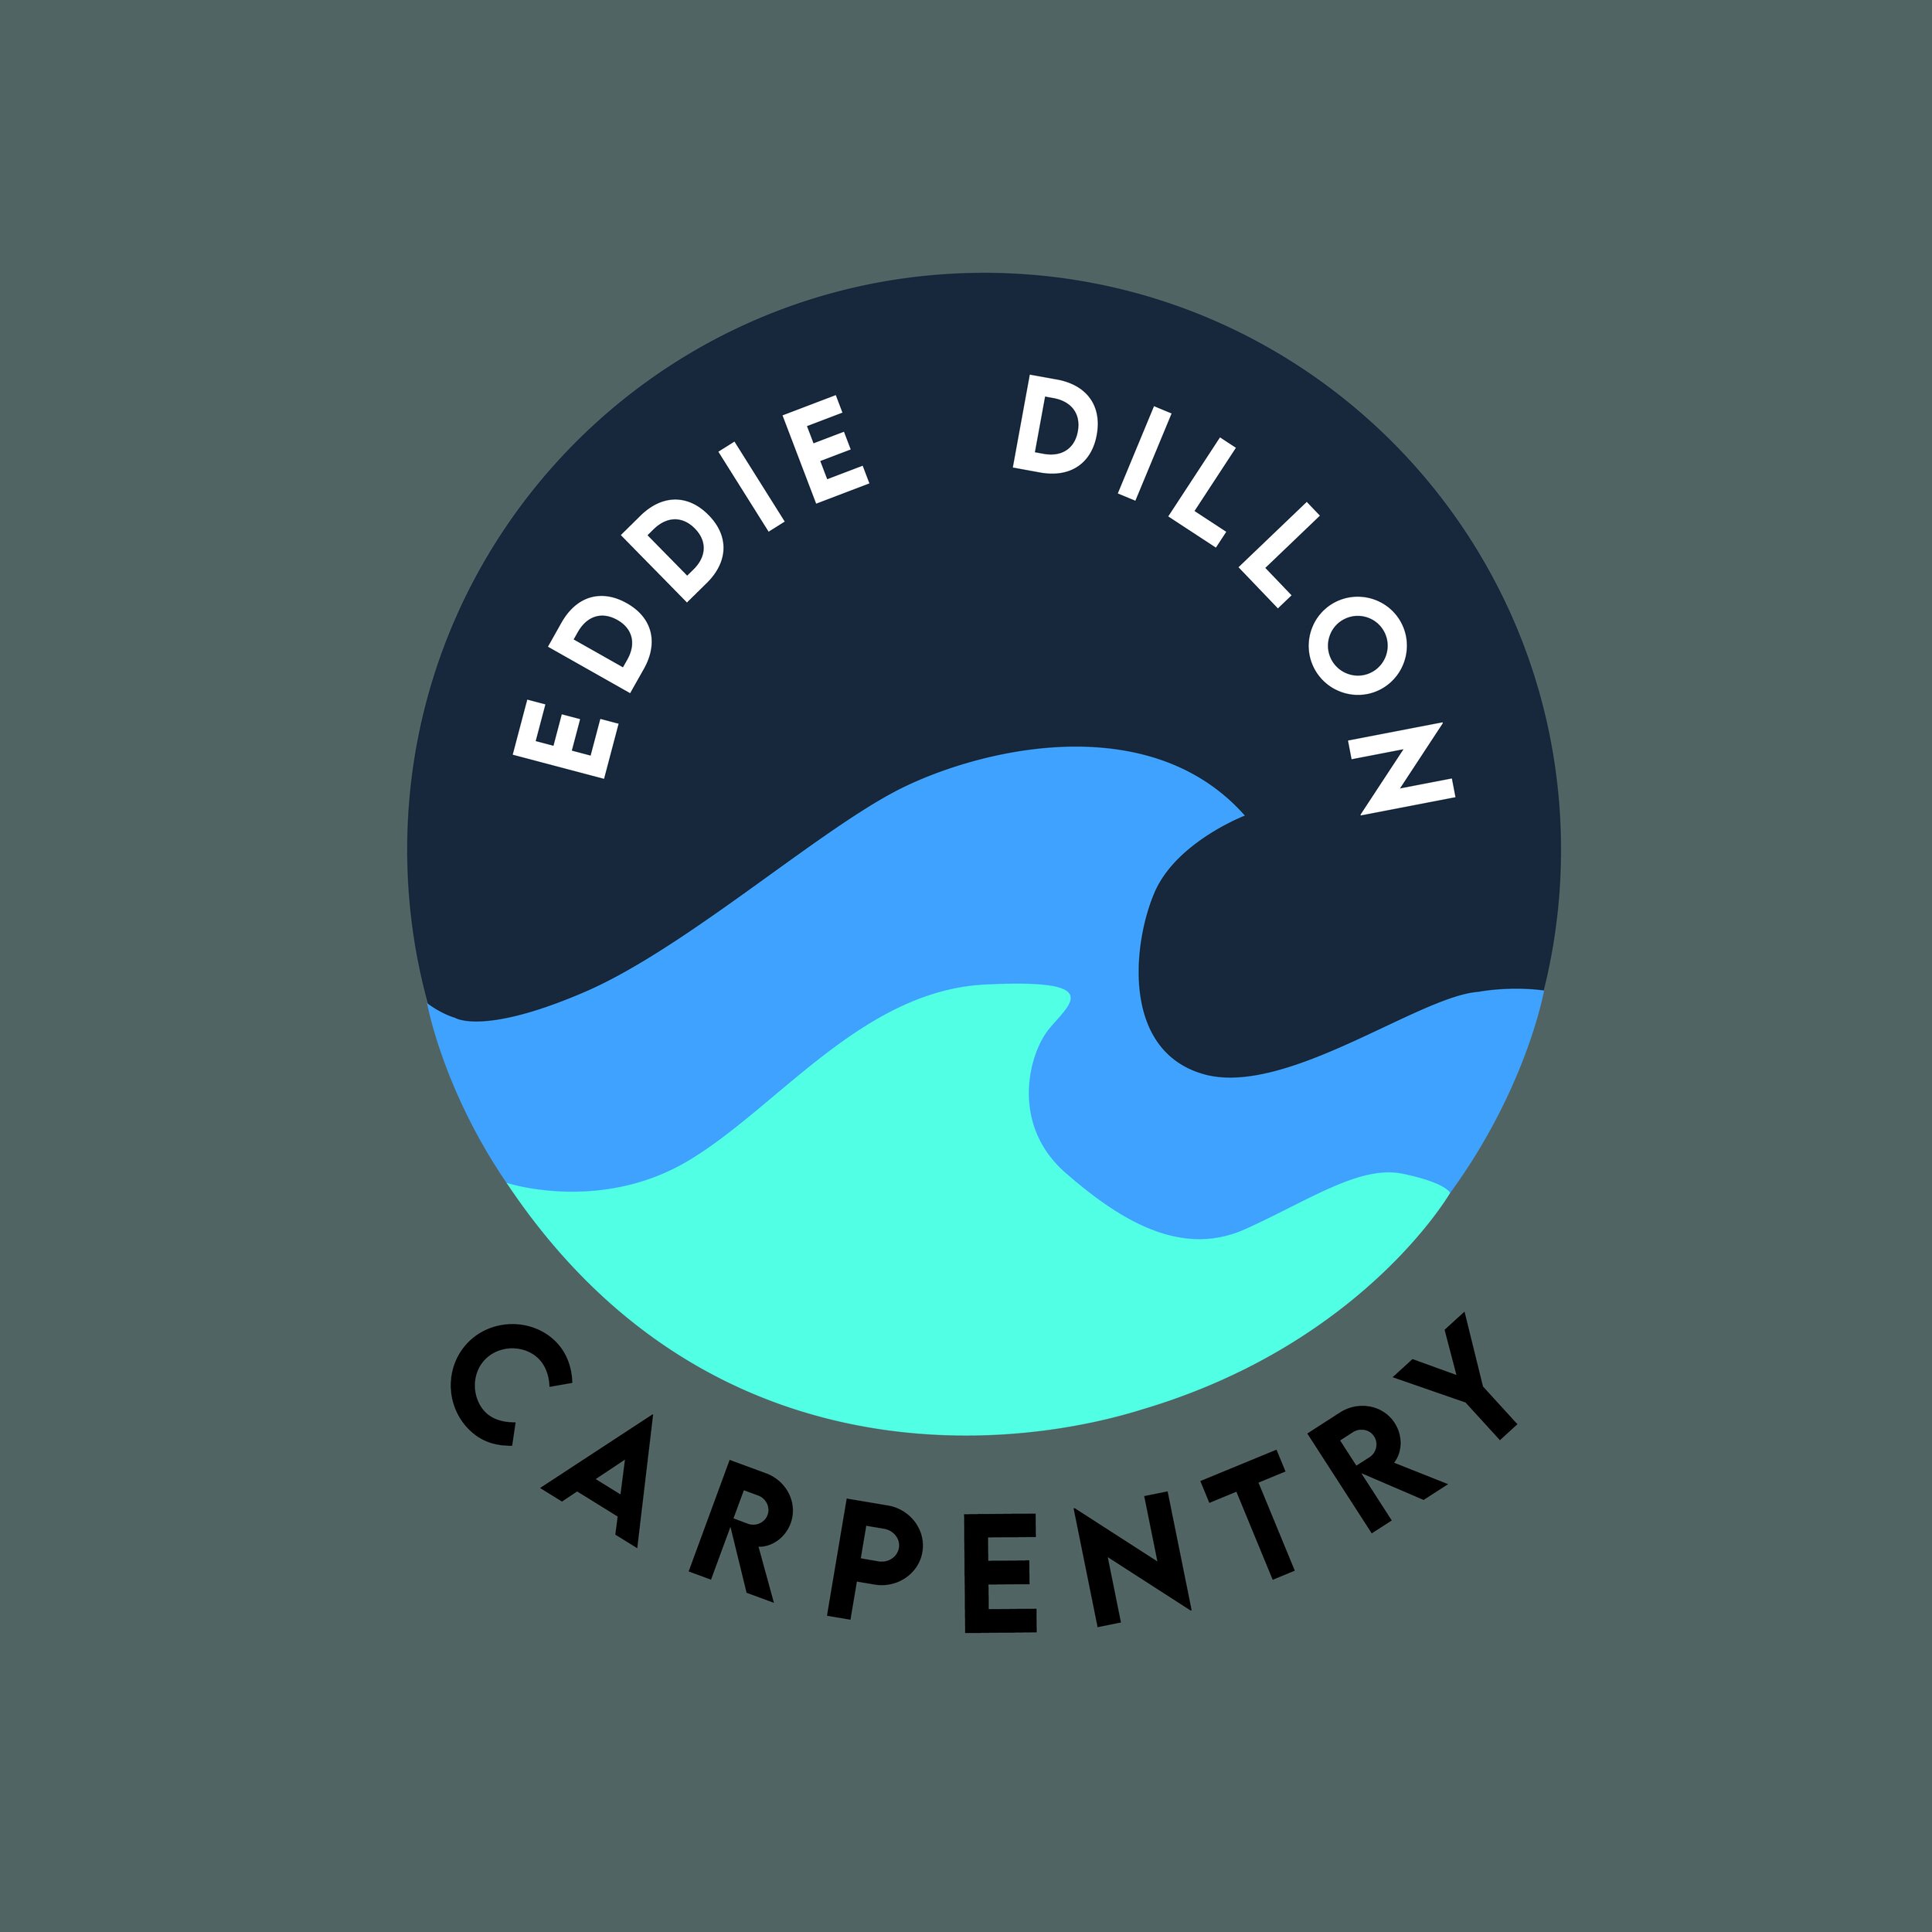 Eddie_Dillon_Carpentry_Logo_Design-04.jpg